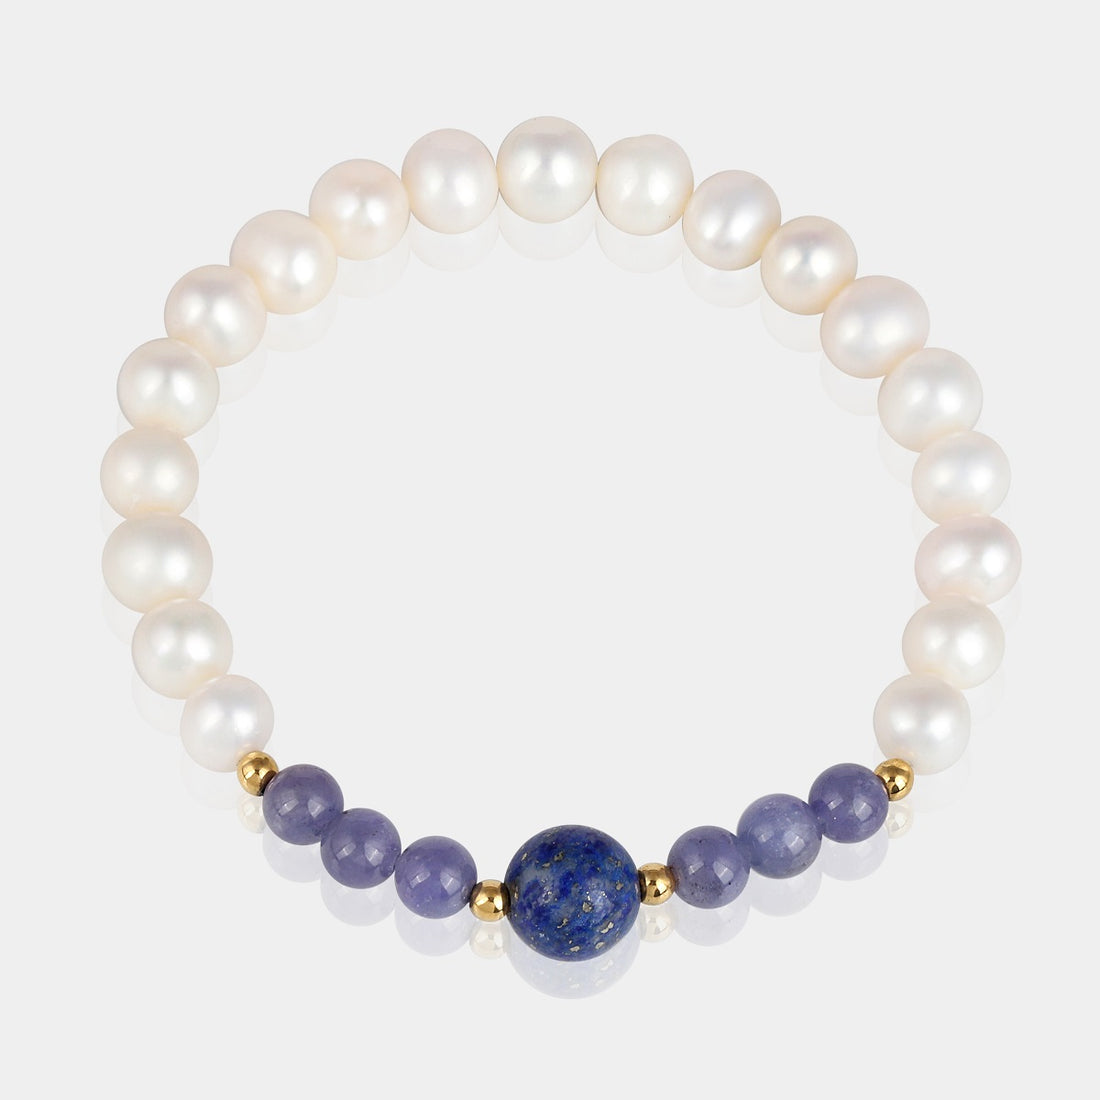 Handmade Gemstone Stretch Bracelet with Pearl, Tanzanite, Lapis Lazuli, Hematite, White, Blue, Gold, Comfort Fit